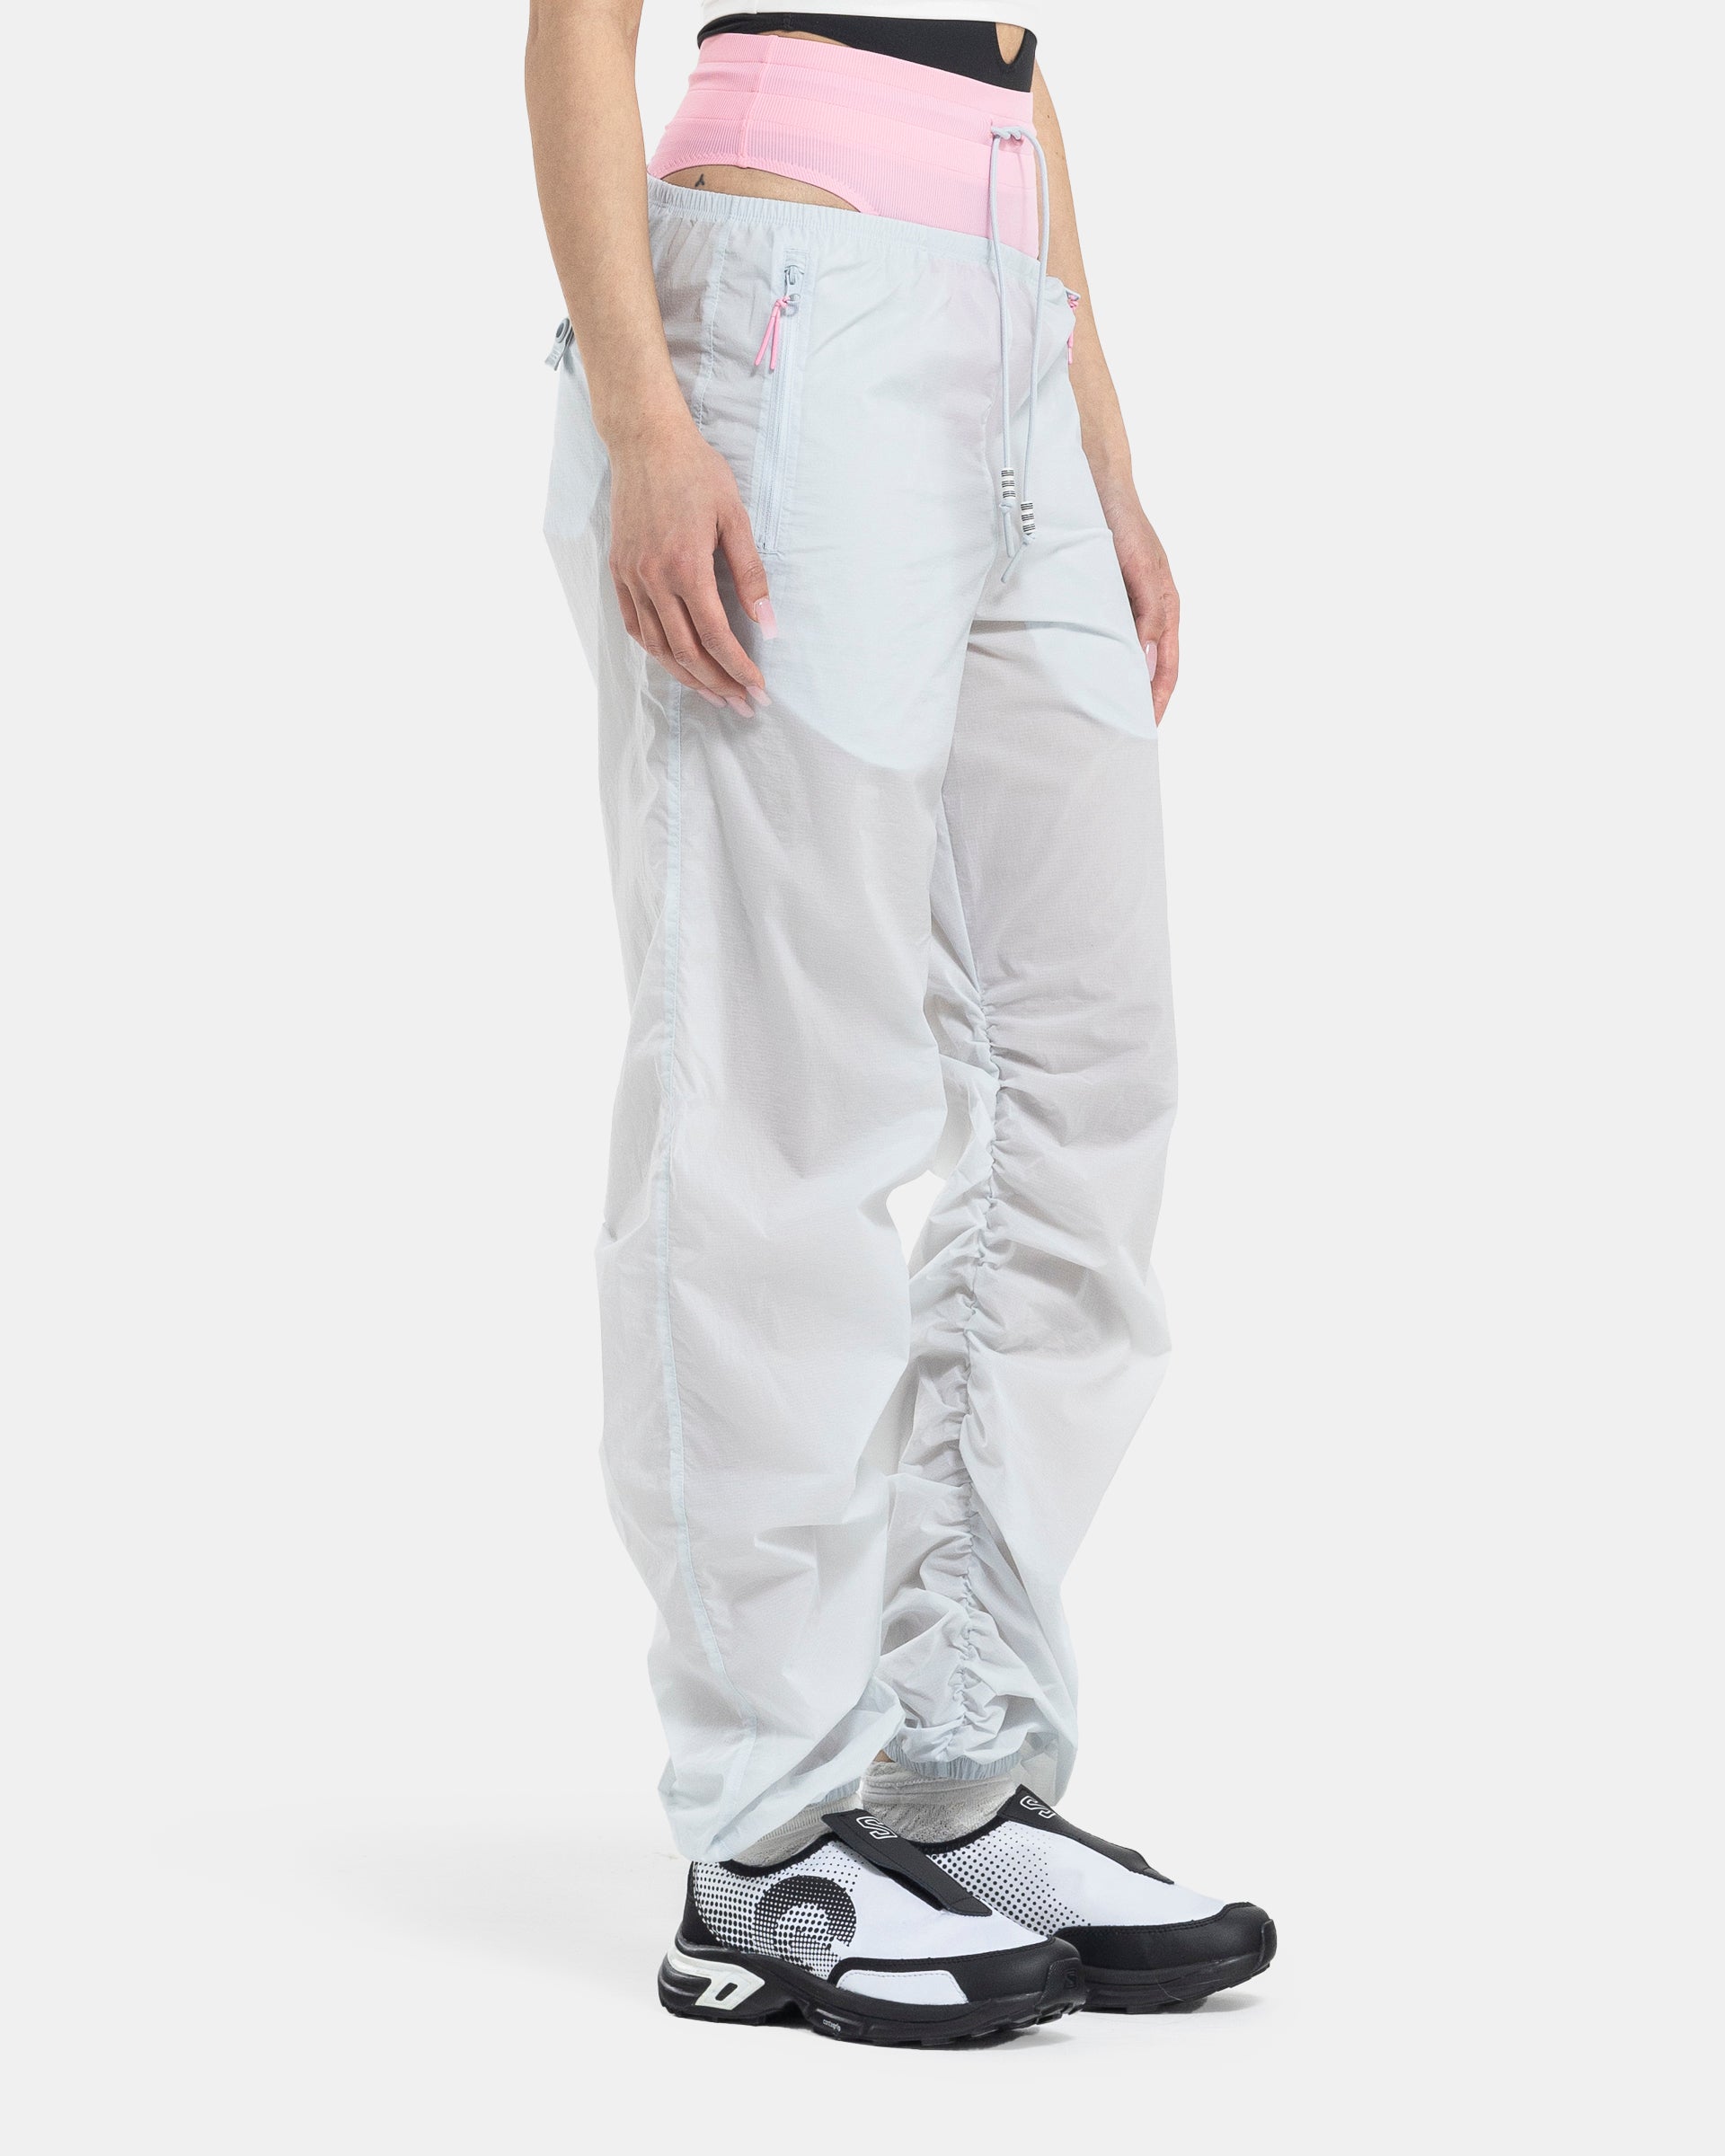 Female model wearing RUI x Adidas Pink Track Pants on white background